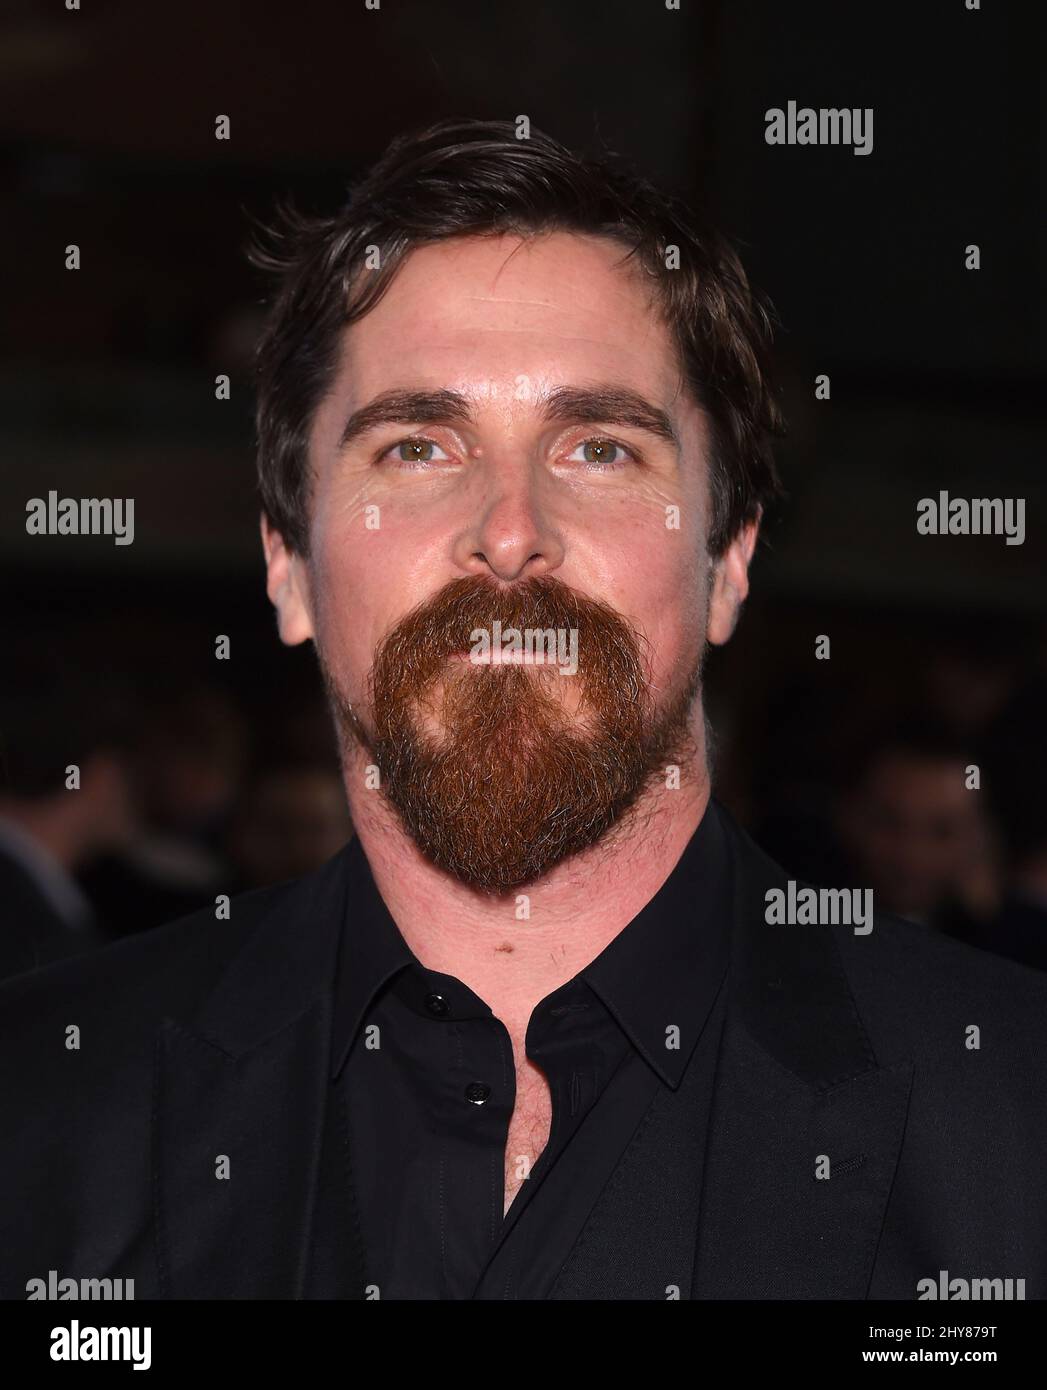 Christian Bale Rocks Knee Brace on 'The Big Short' Set: Photo